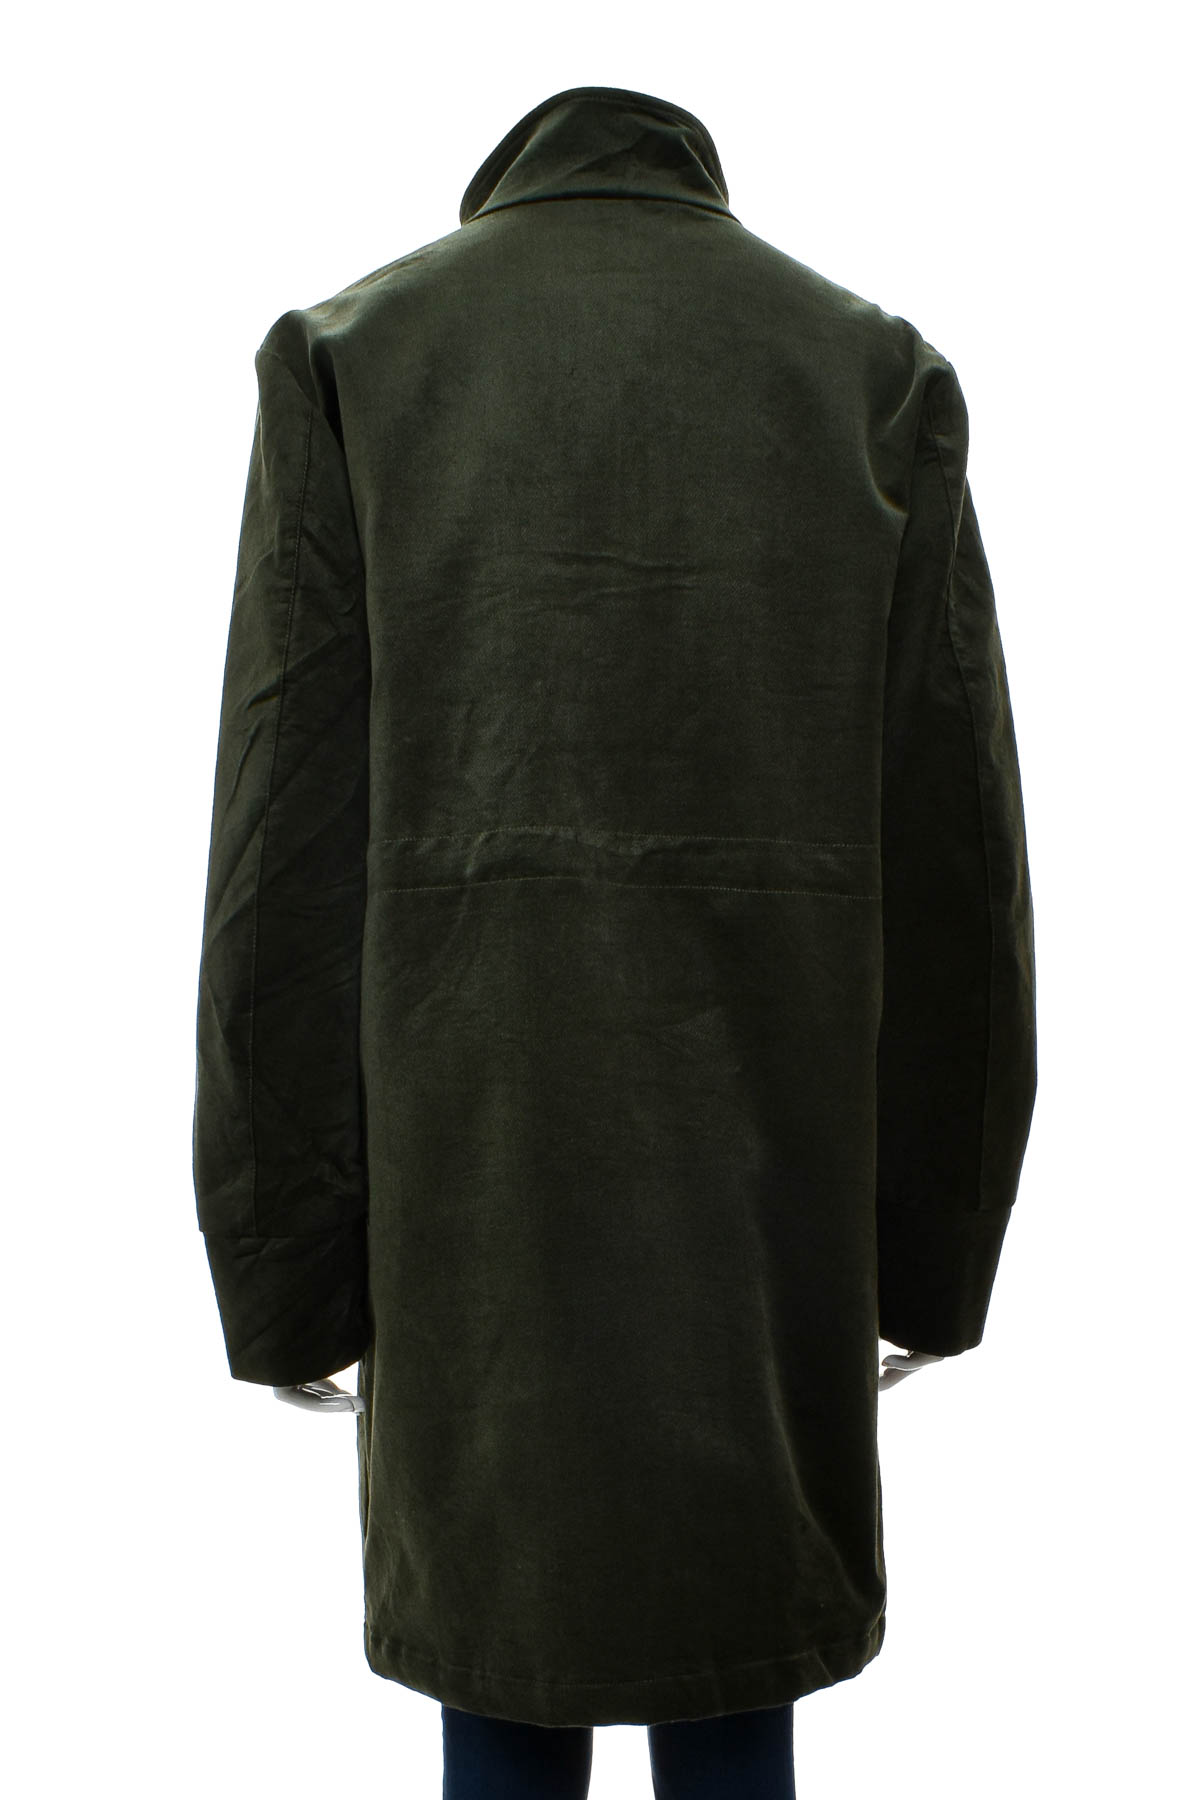 Female jacket - LangerChen - 1